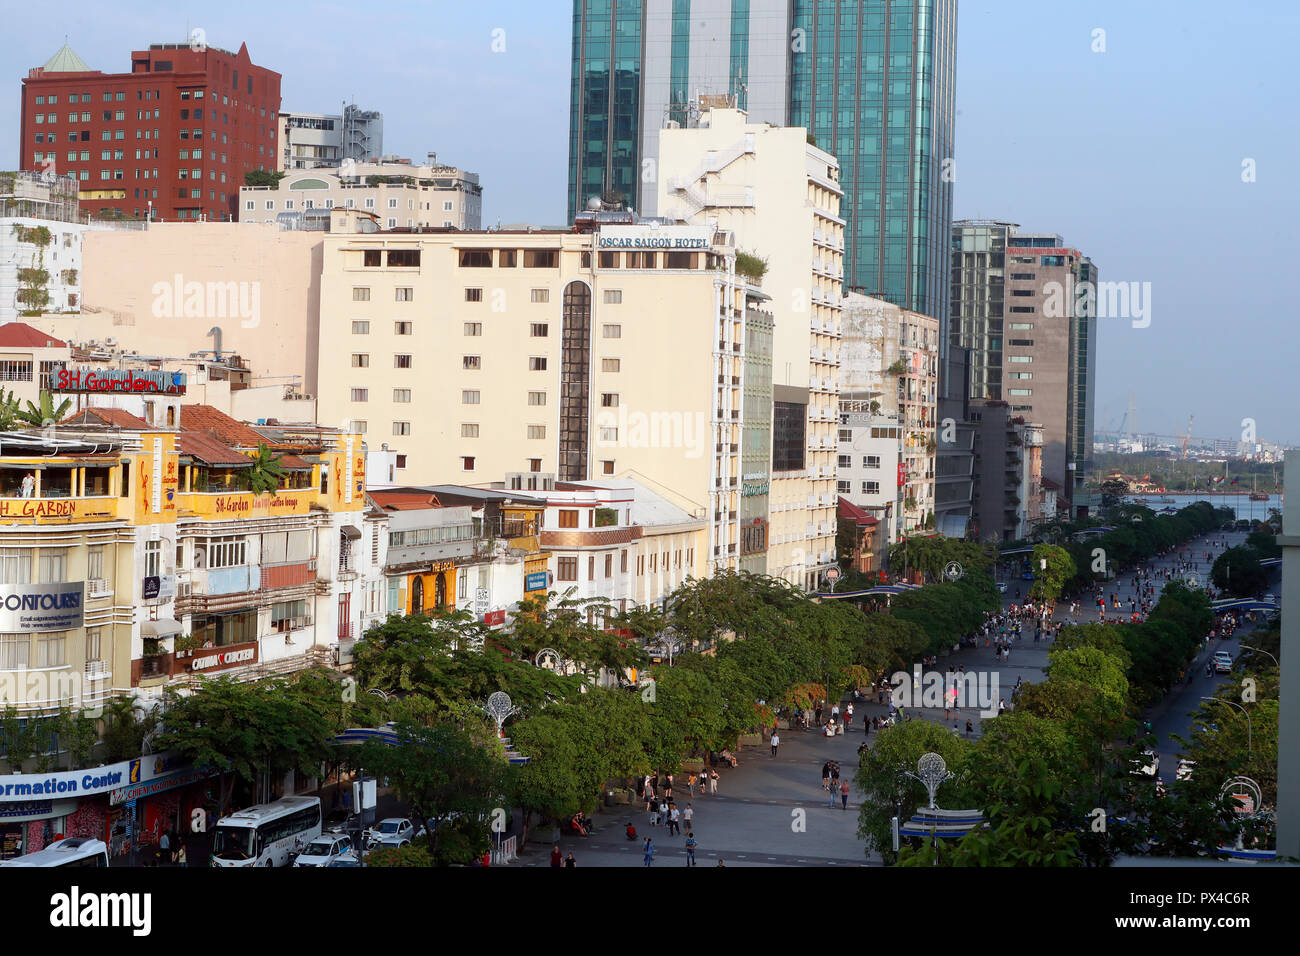 Nguyen Hue Street. District 1. La città di Ho Chi Minh (Saigon). Il Vietnam. Foto Stock